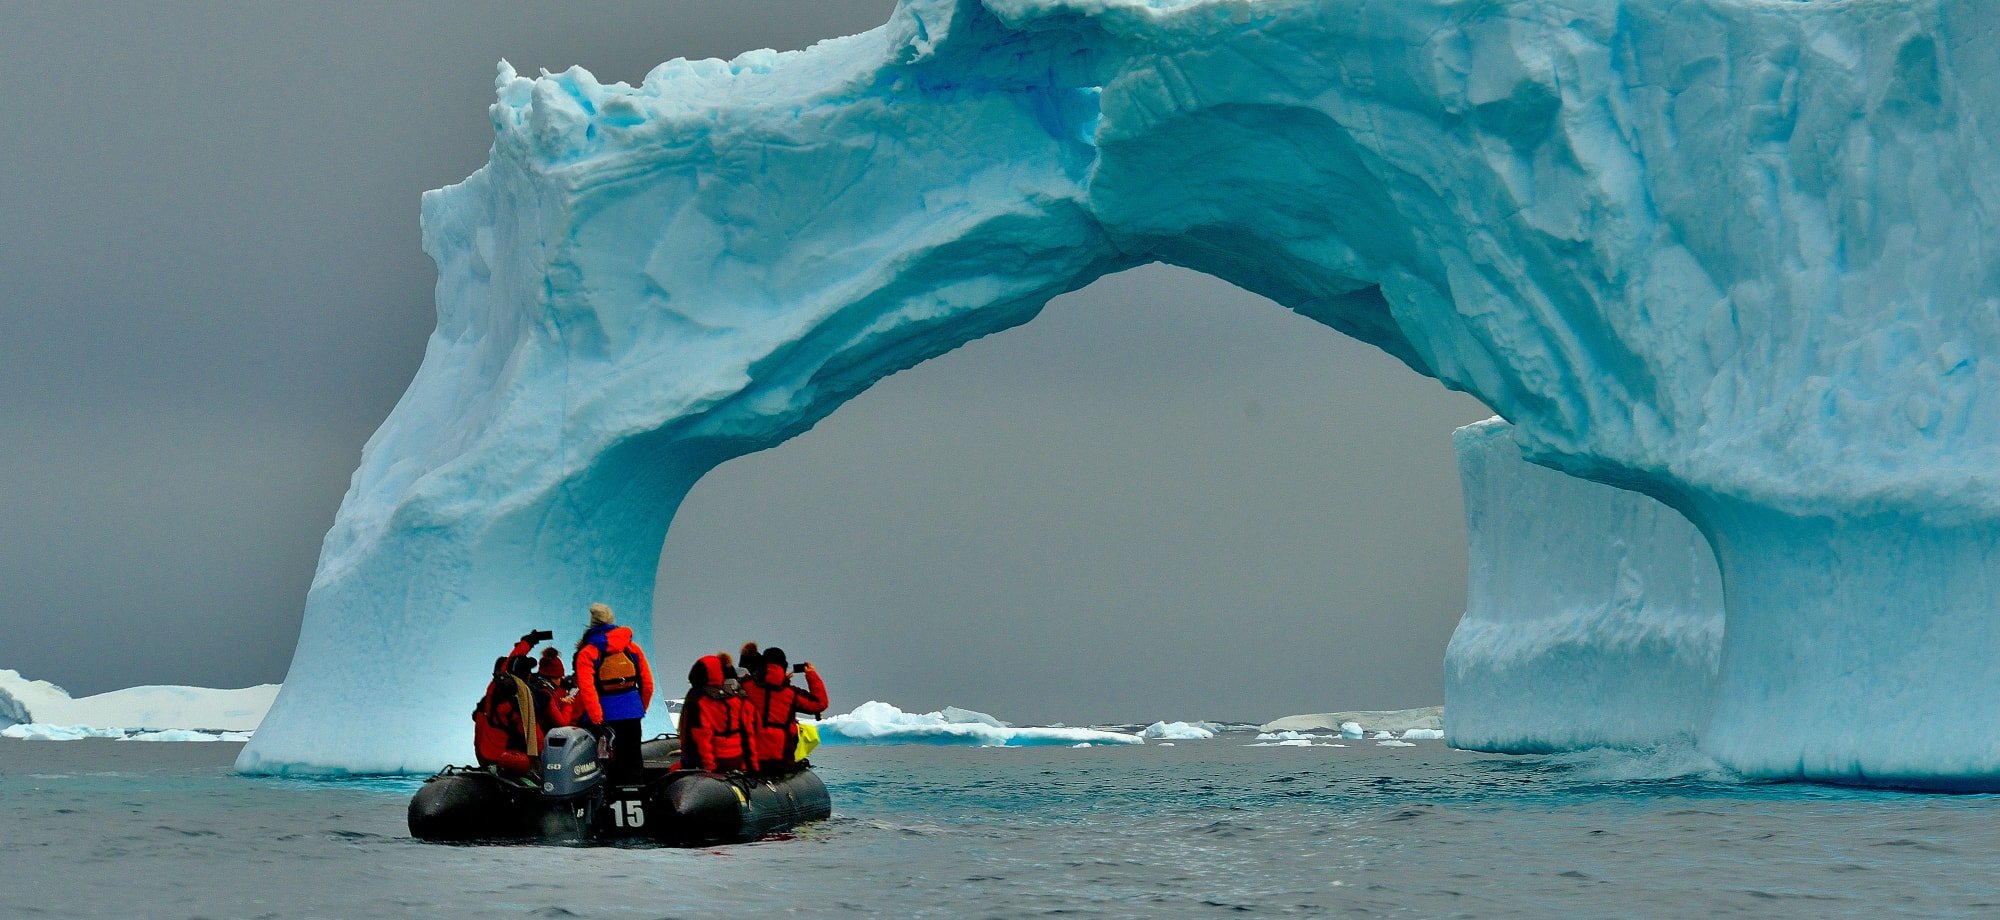 Antarctica_Free_Stock_Image_Unsplash_2020_CCLong_Ma-yK5490Vr8MA_cqioou